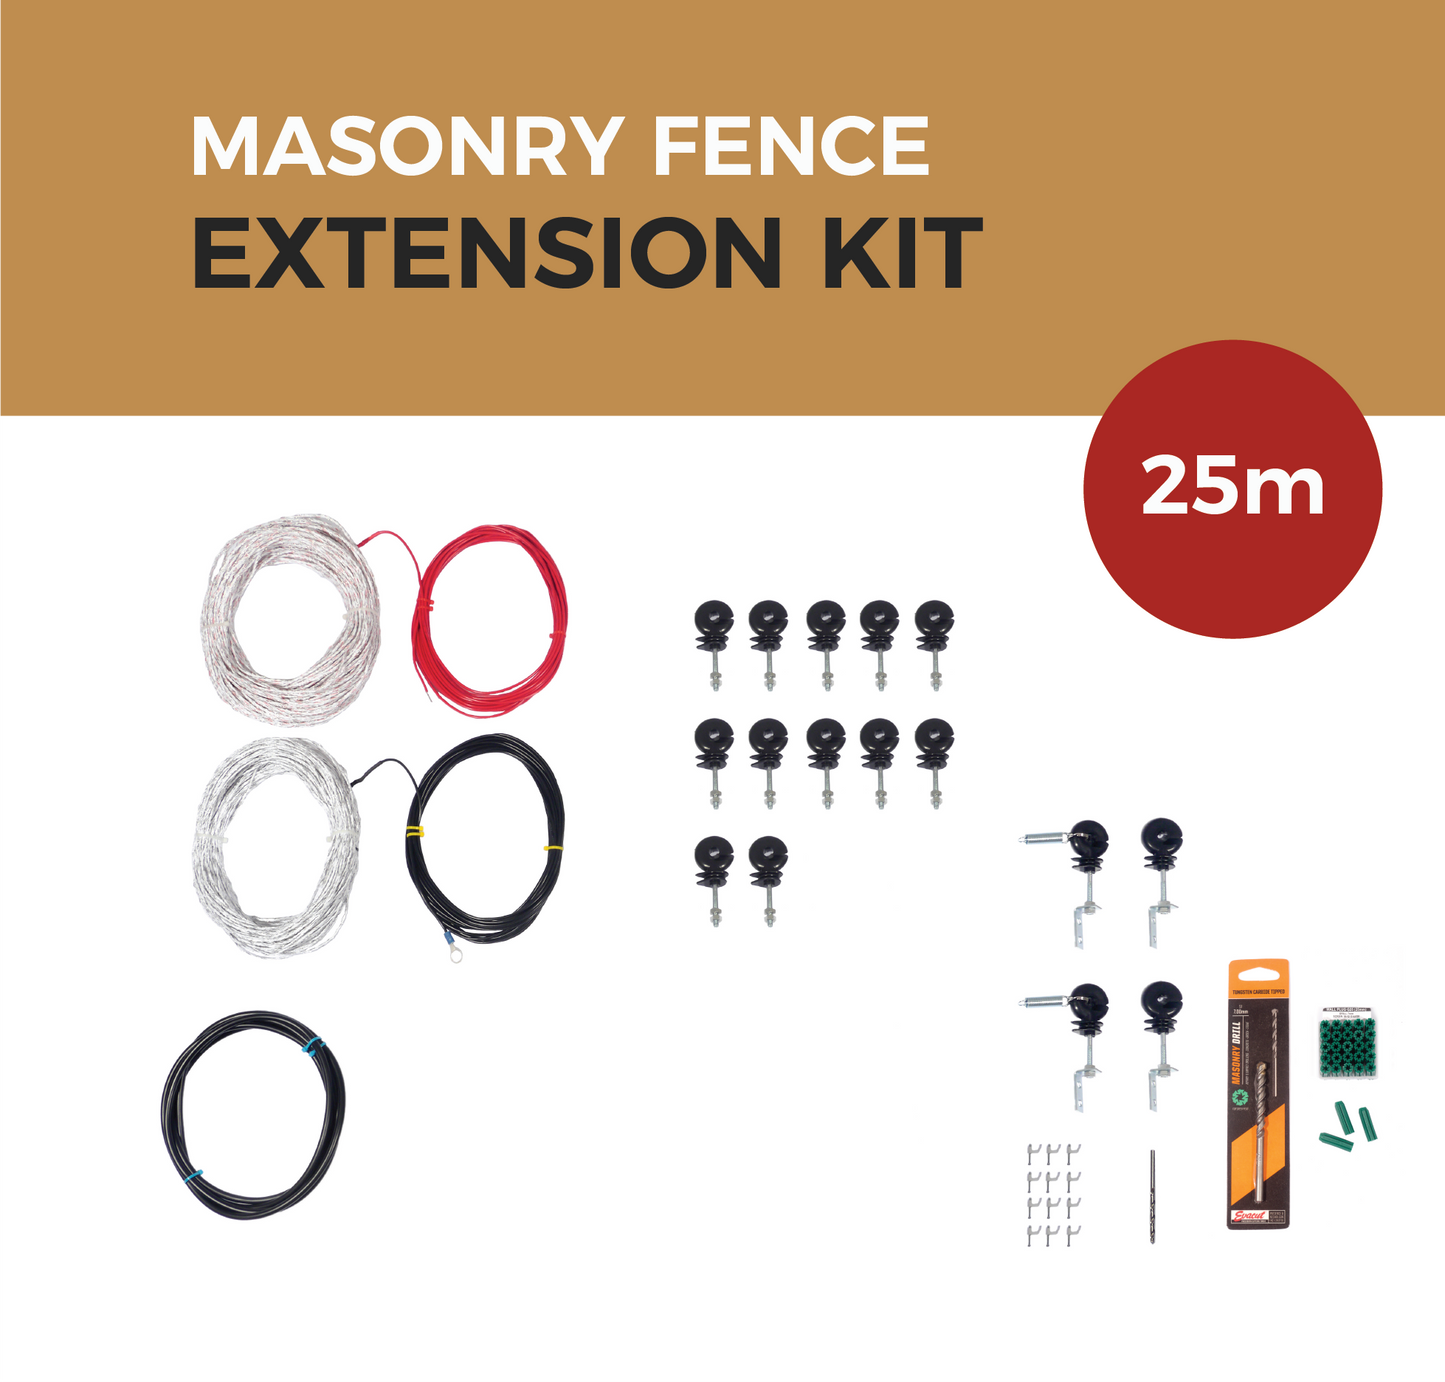 Cat Proof Fence 25m Extension Kit - Masonry Fences | SmartCatsStayHome